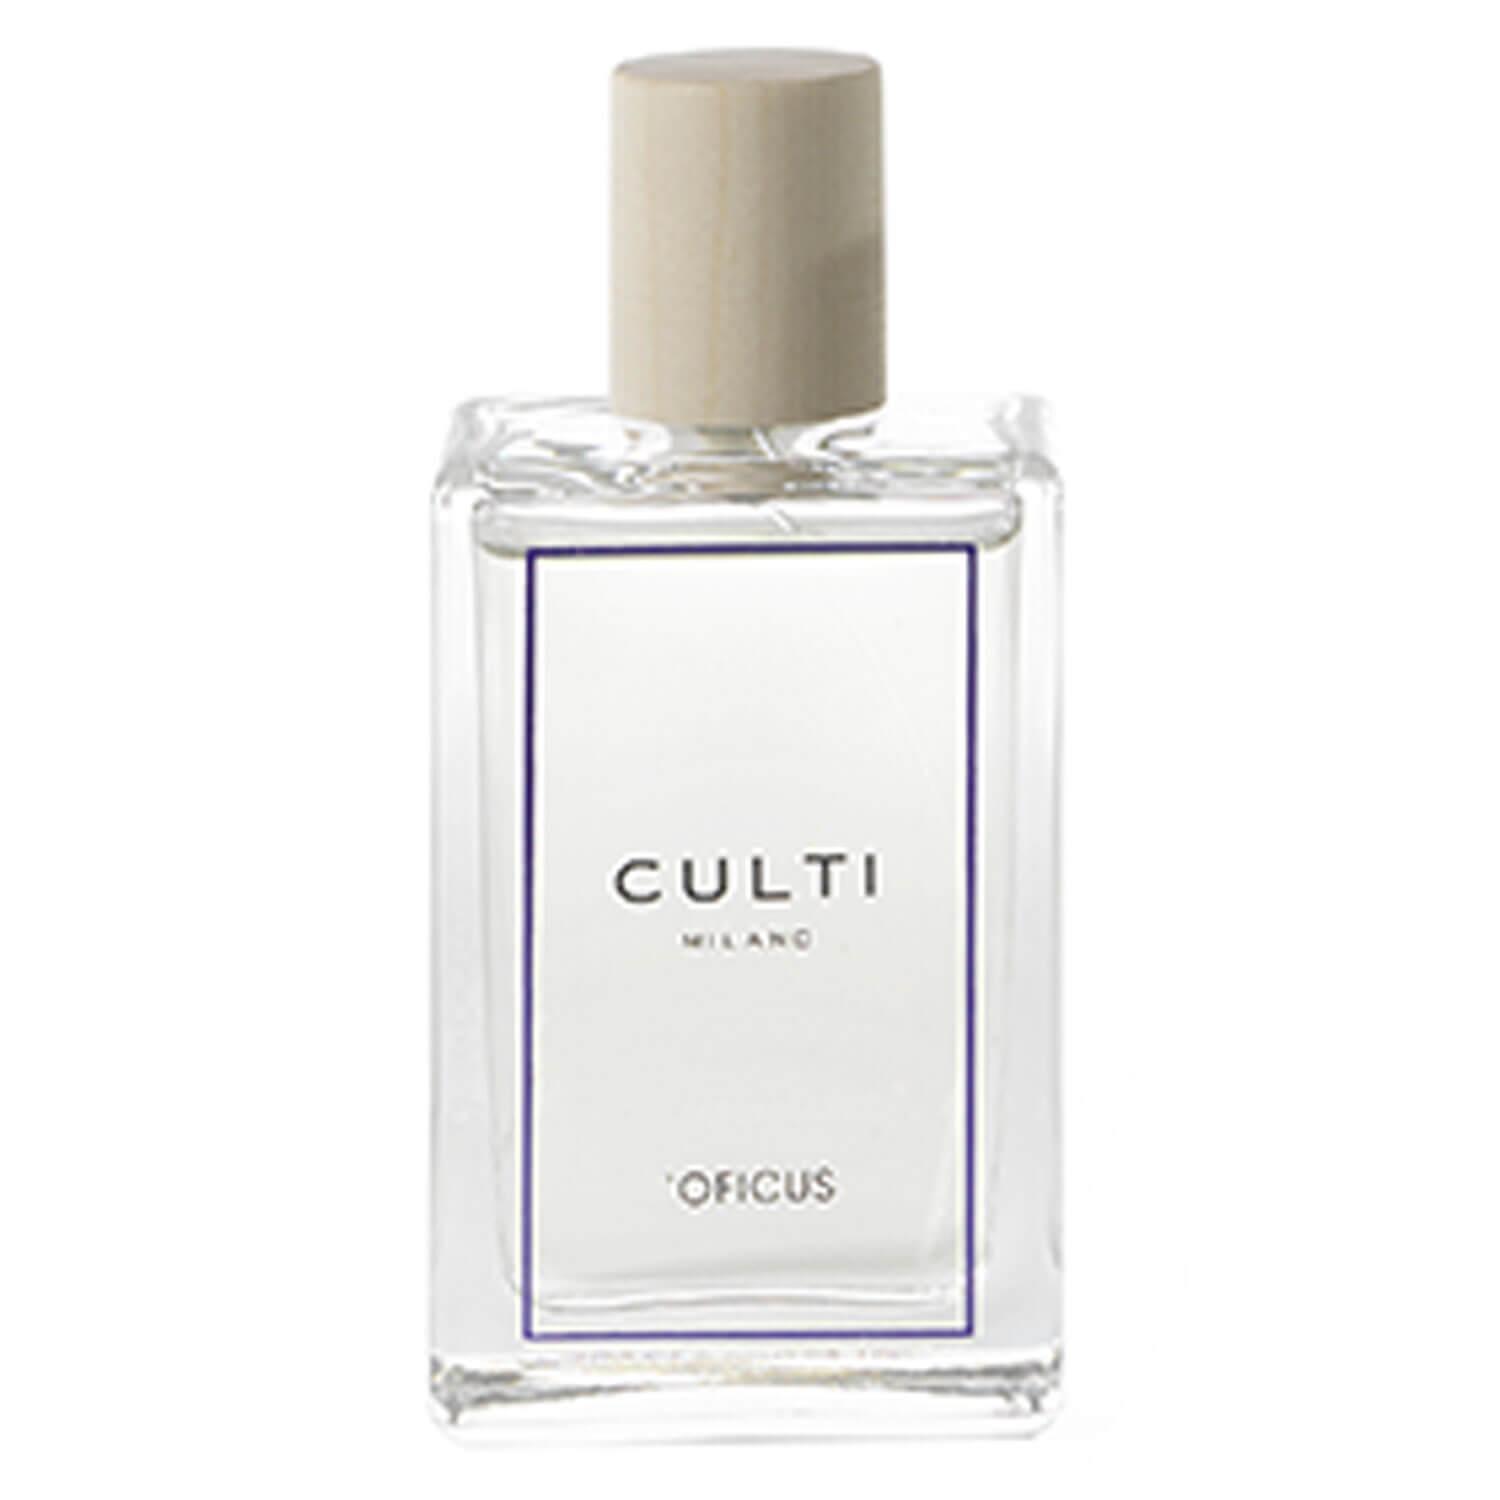 CULTI Spray - Parfum D'Ambiance Spray 'Oficus